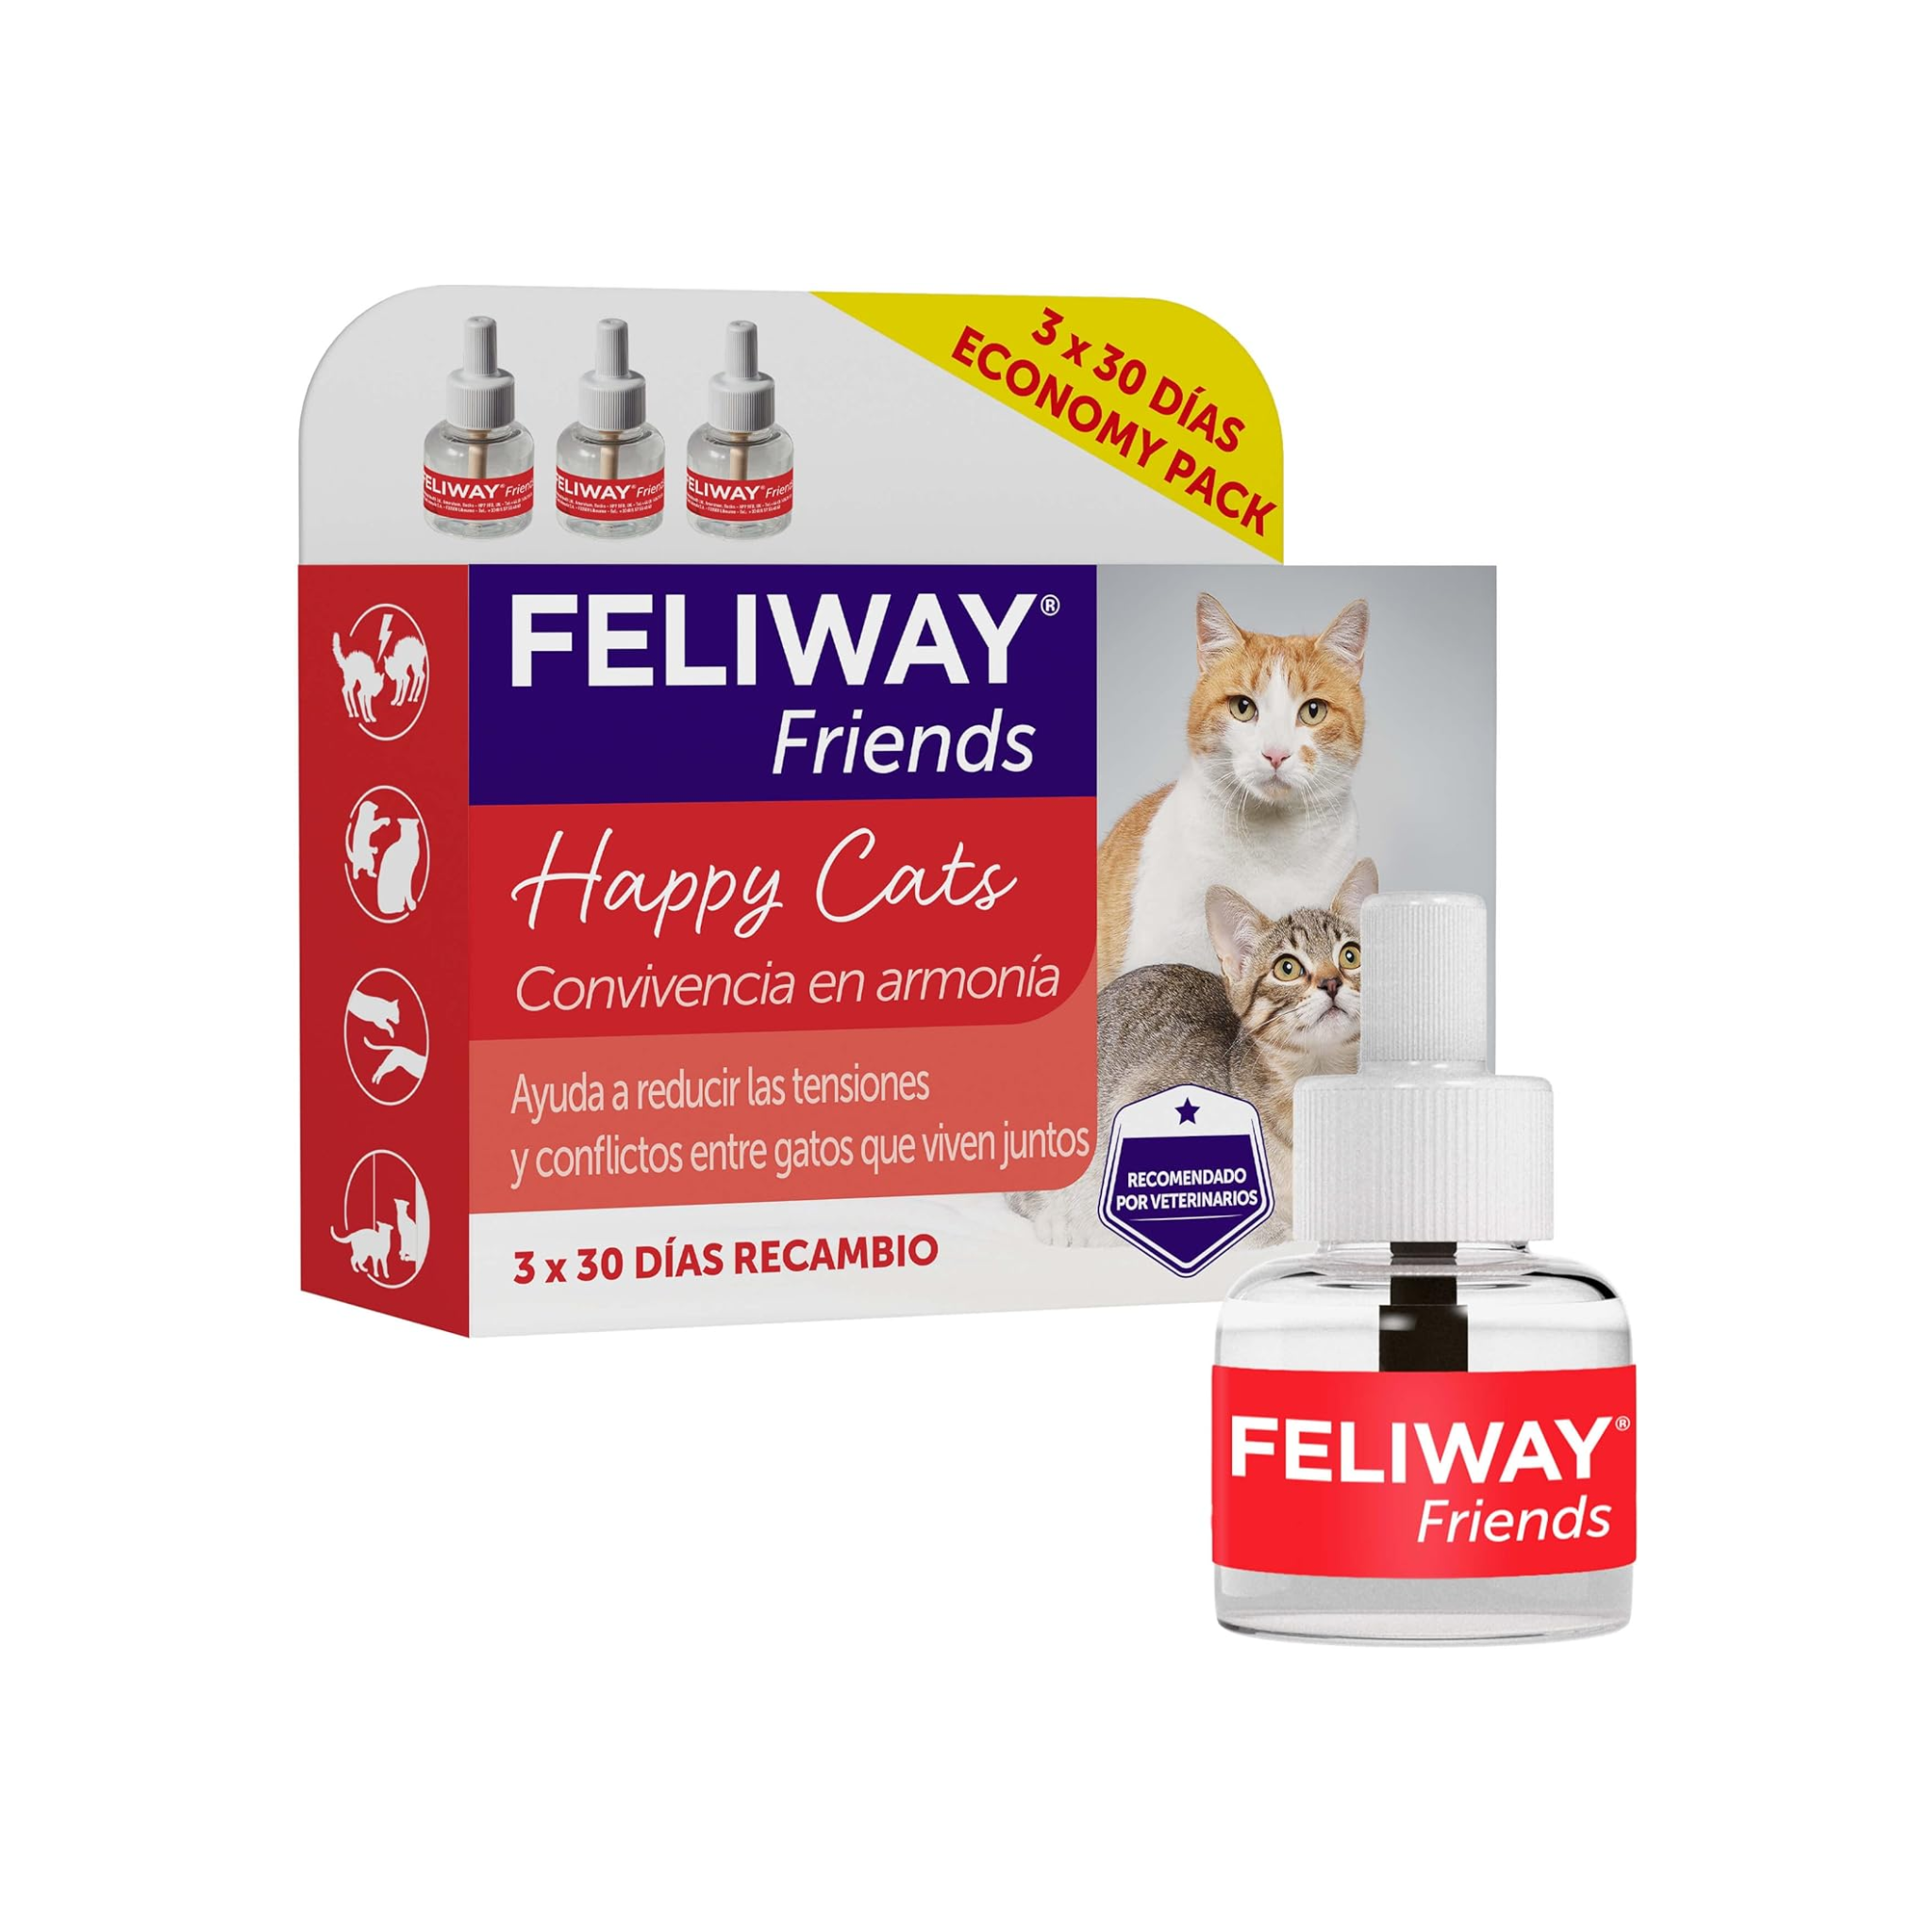 Feliway friends diffuser + refill 1 month